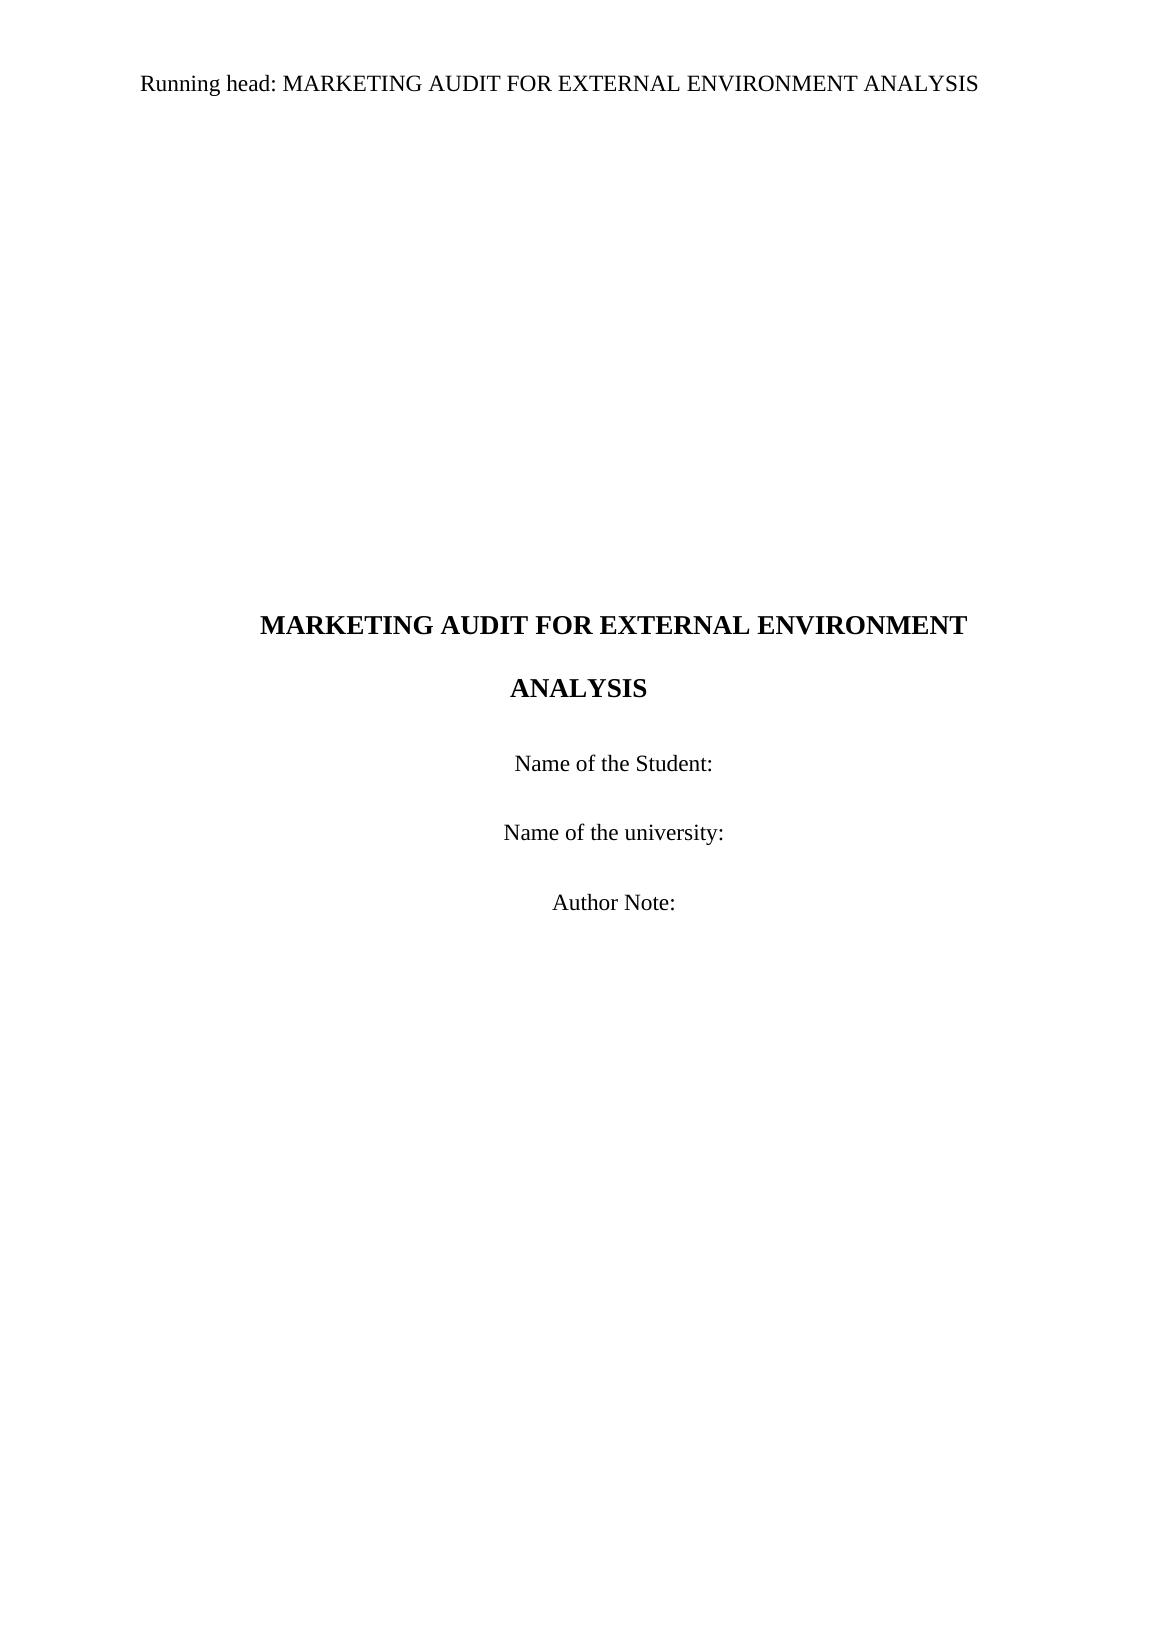 Marketing Audit for External Environment Analysis | Report_1